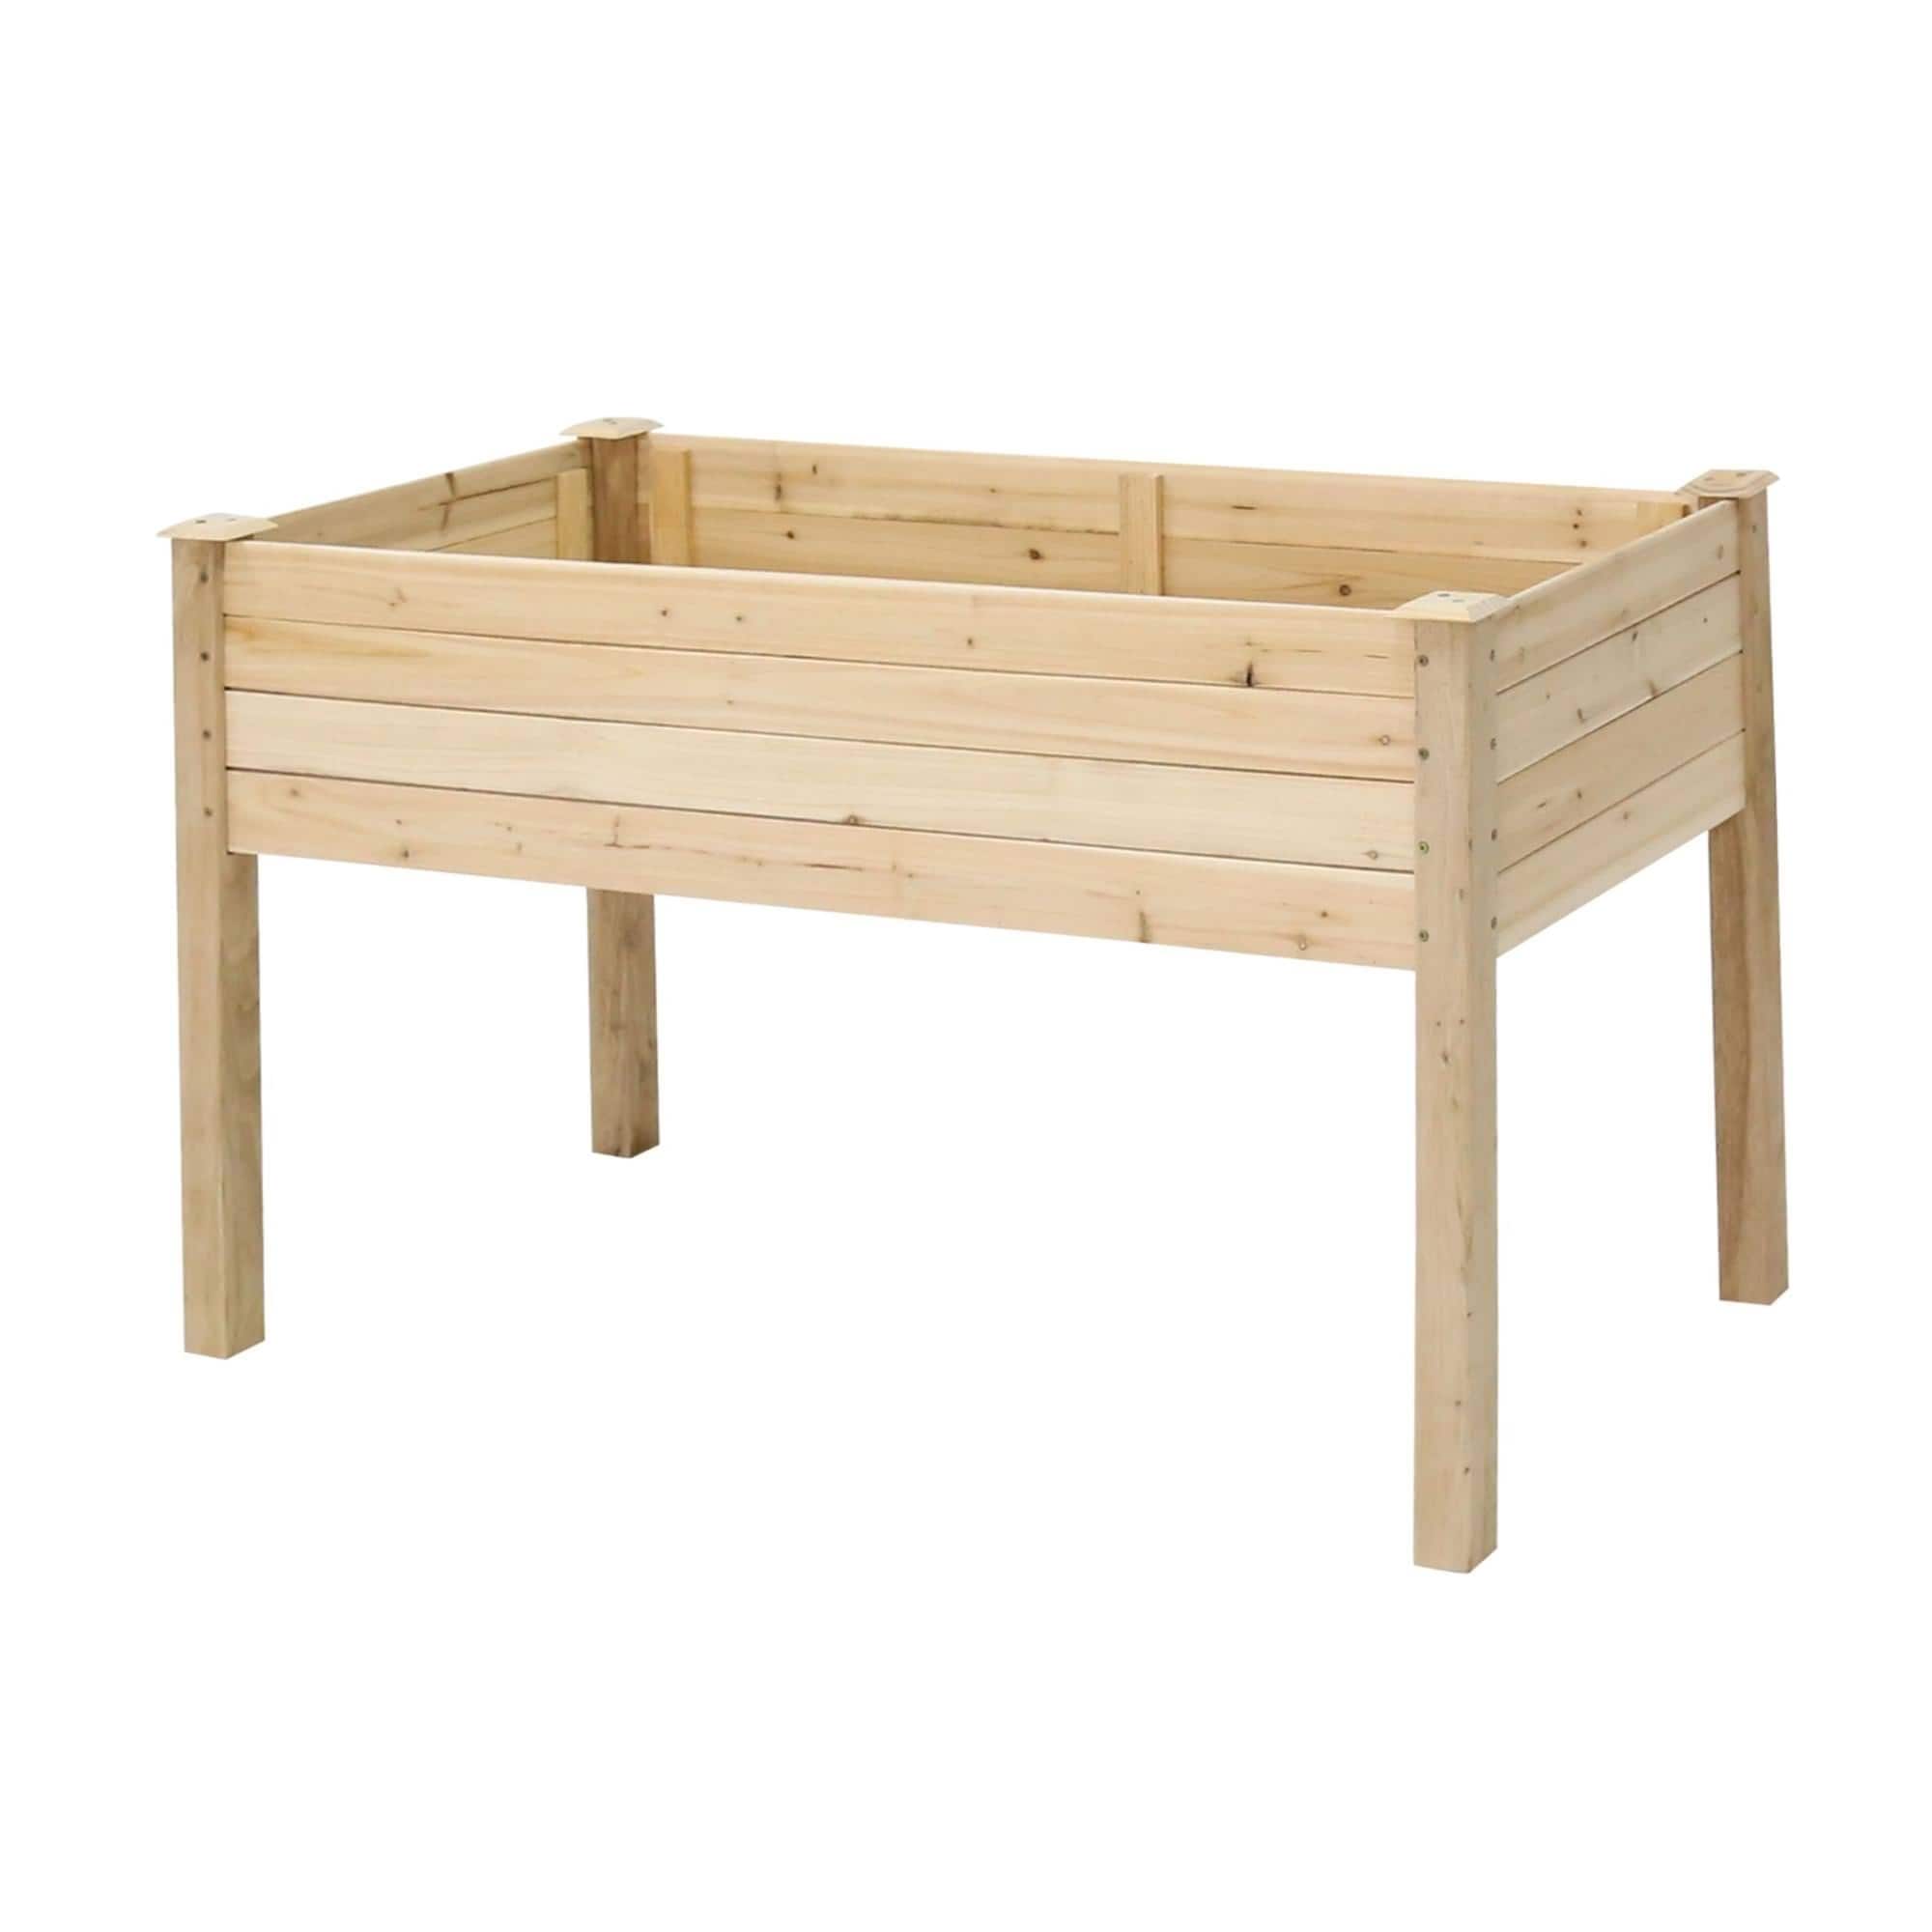 Kinbor Cedar Wood Raised Garden Bed Elevated Planter Kit Grow Vegetables Planter Box On Sale Overstock 27550092